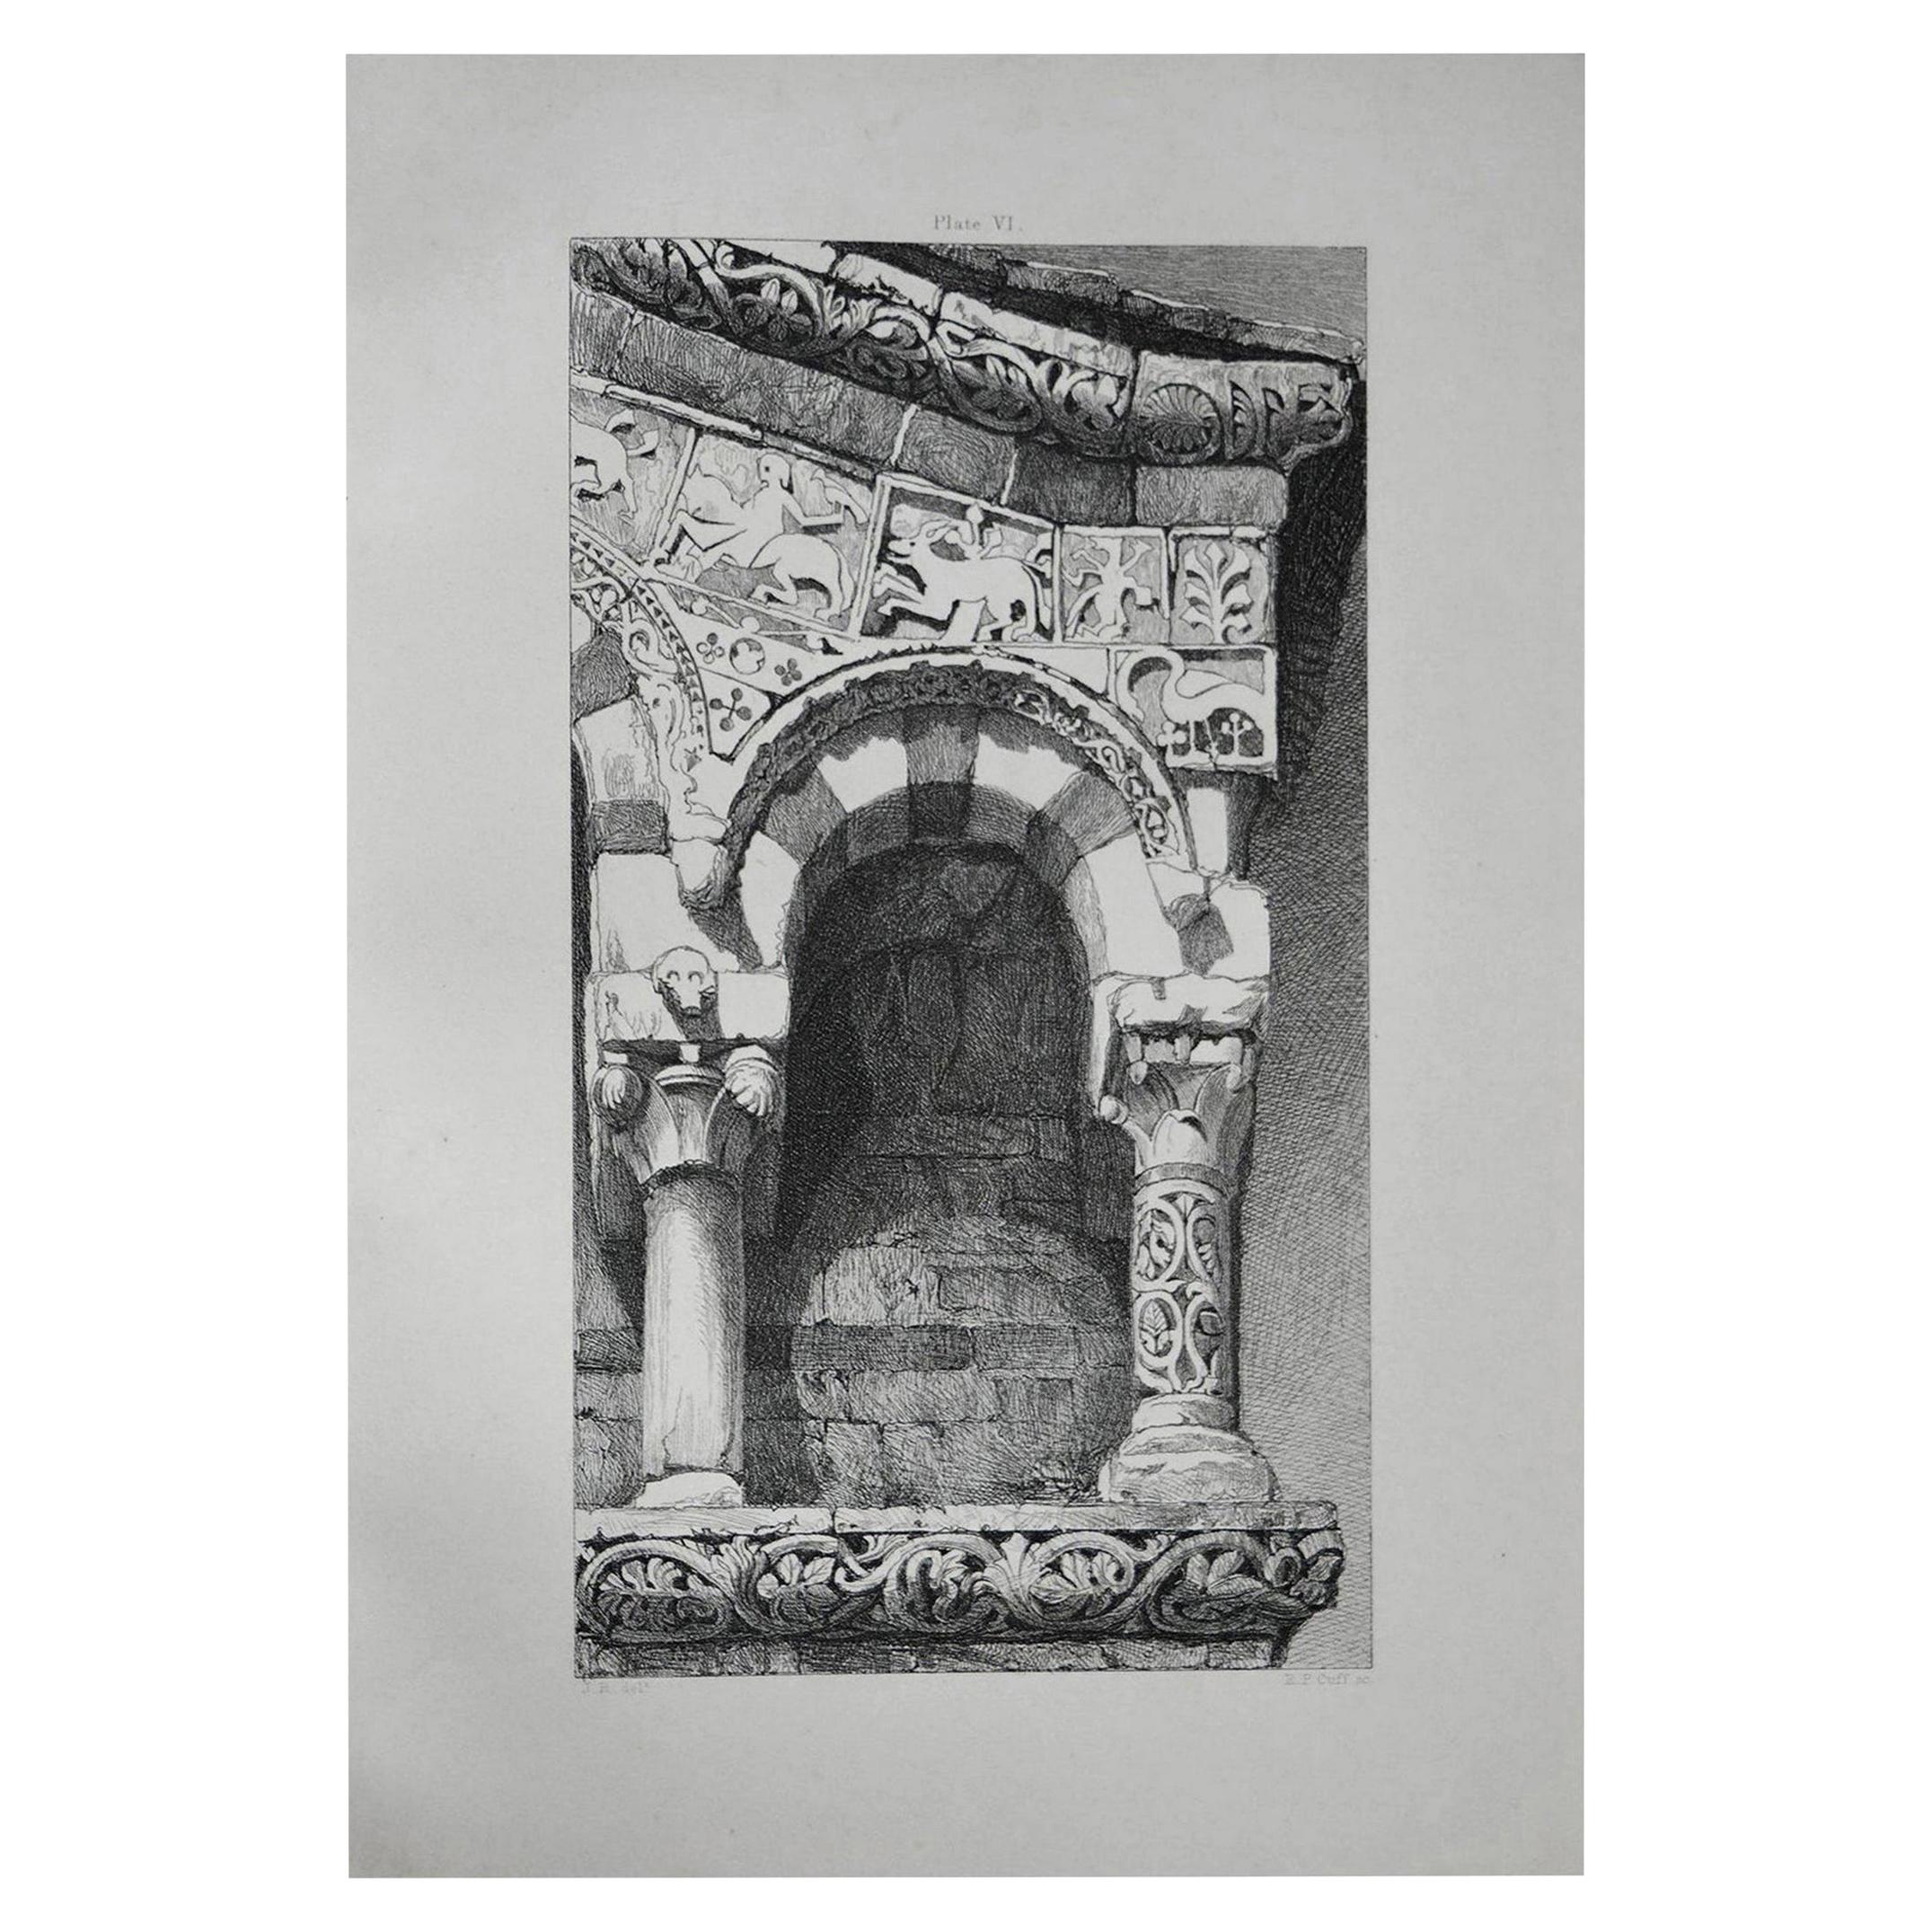 Original Antique Architectural Print by John Ruskin, circa 1880, 'Lucca'